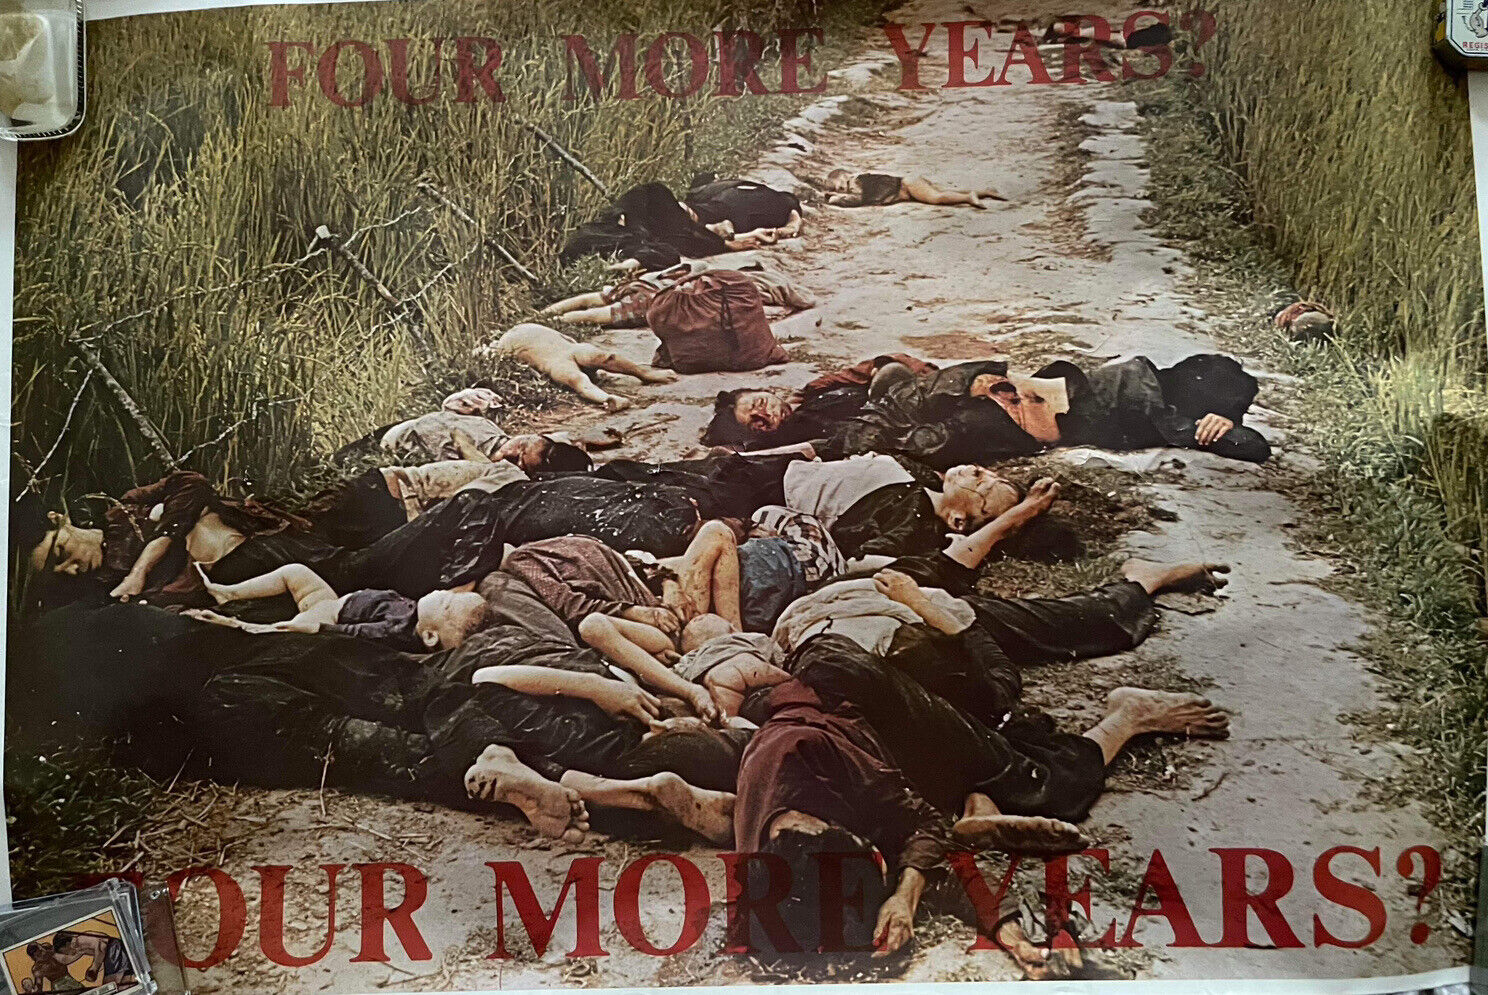 Original Vintage Poster FOUR MORE YEARS? Vietnam War Protest Propaganda GRAPHIC